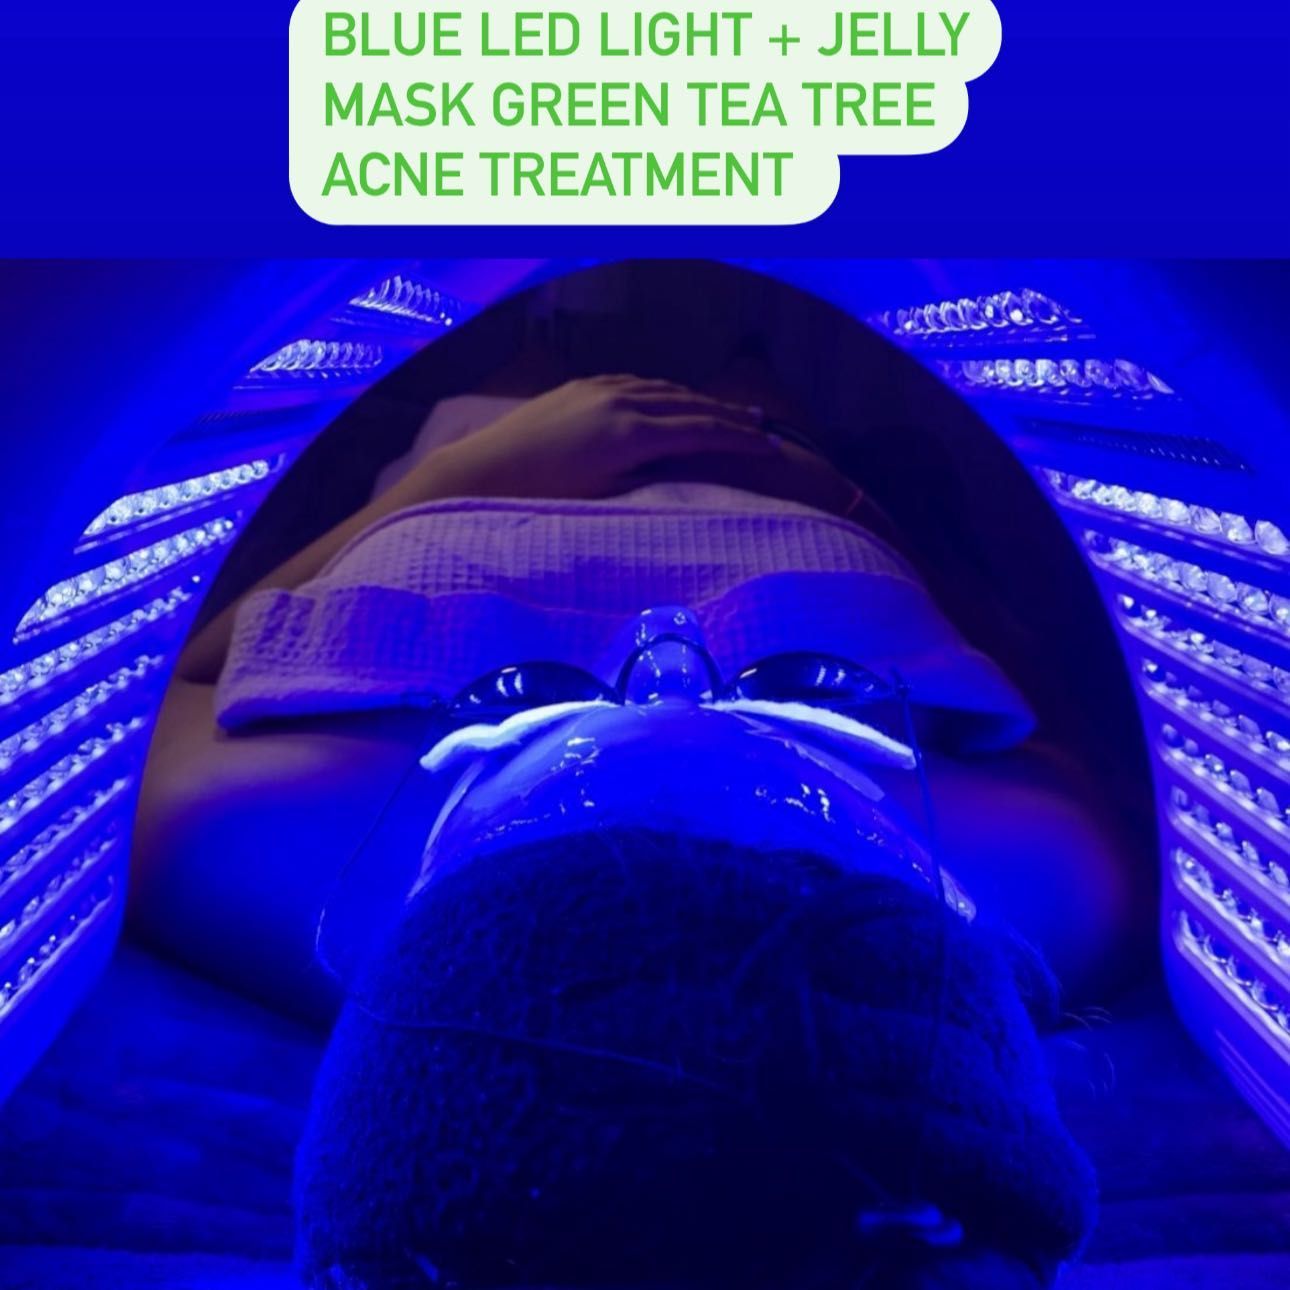 Blue light + jelly mask Acne green tea tree mask portfolio